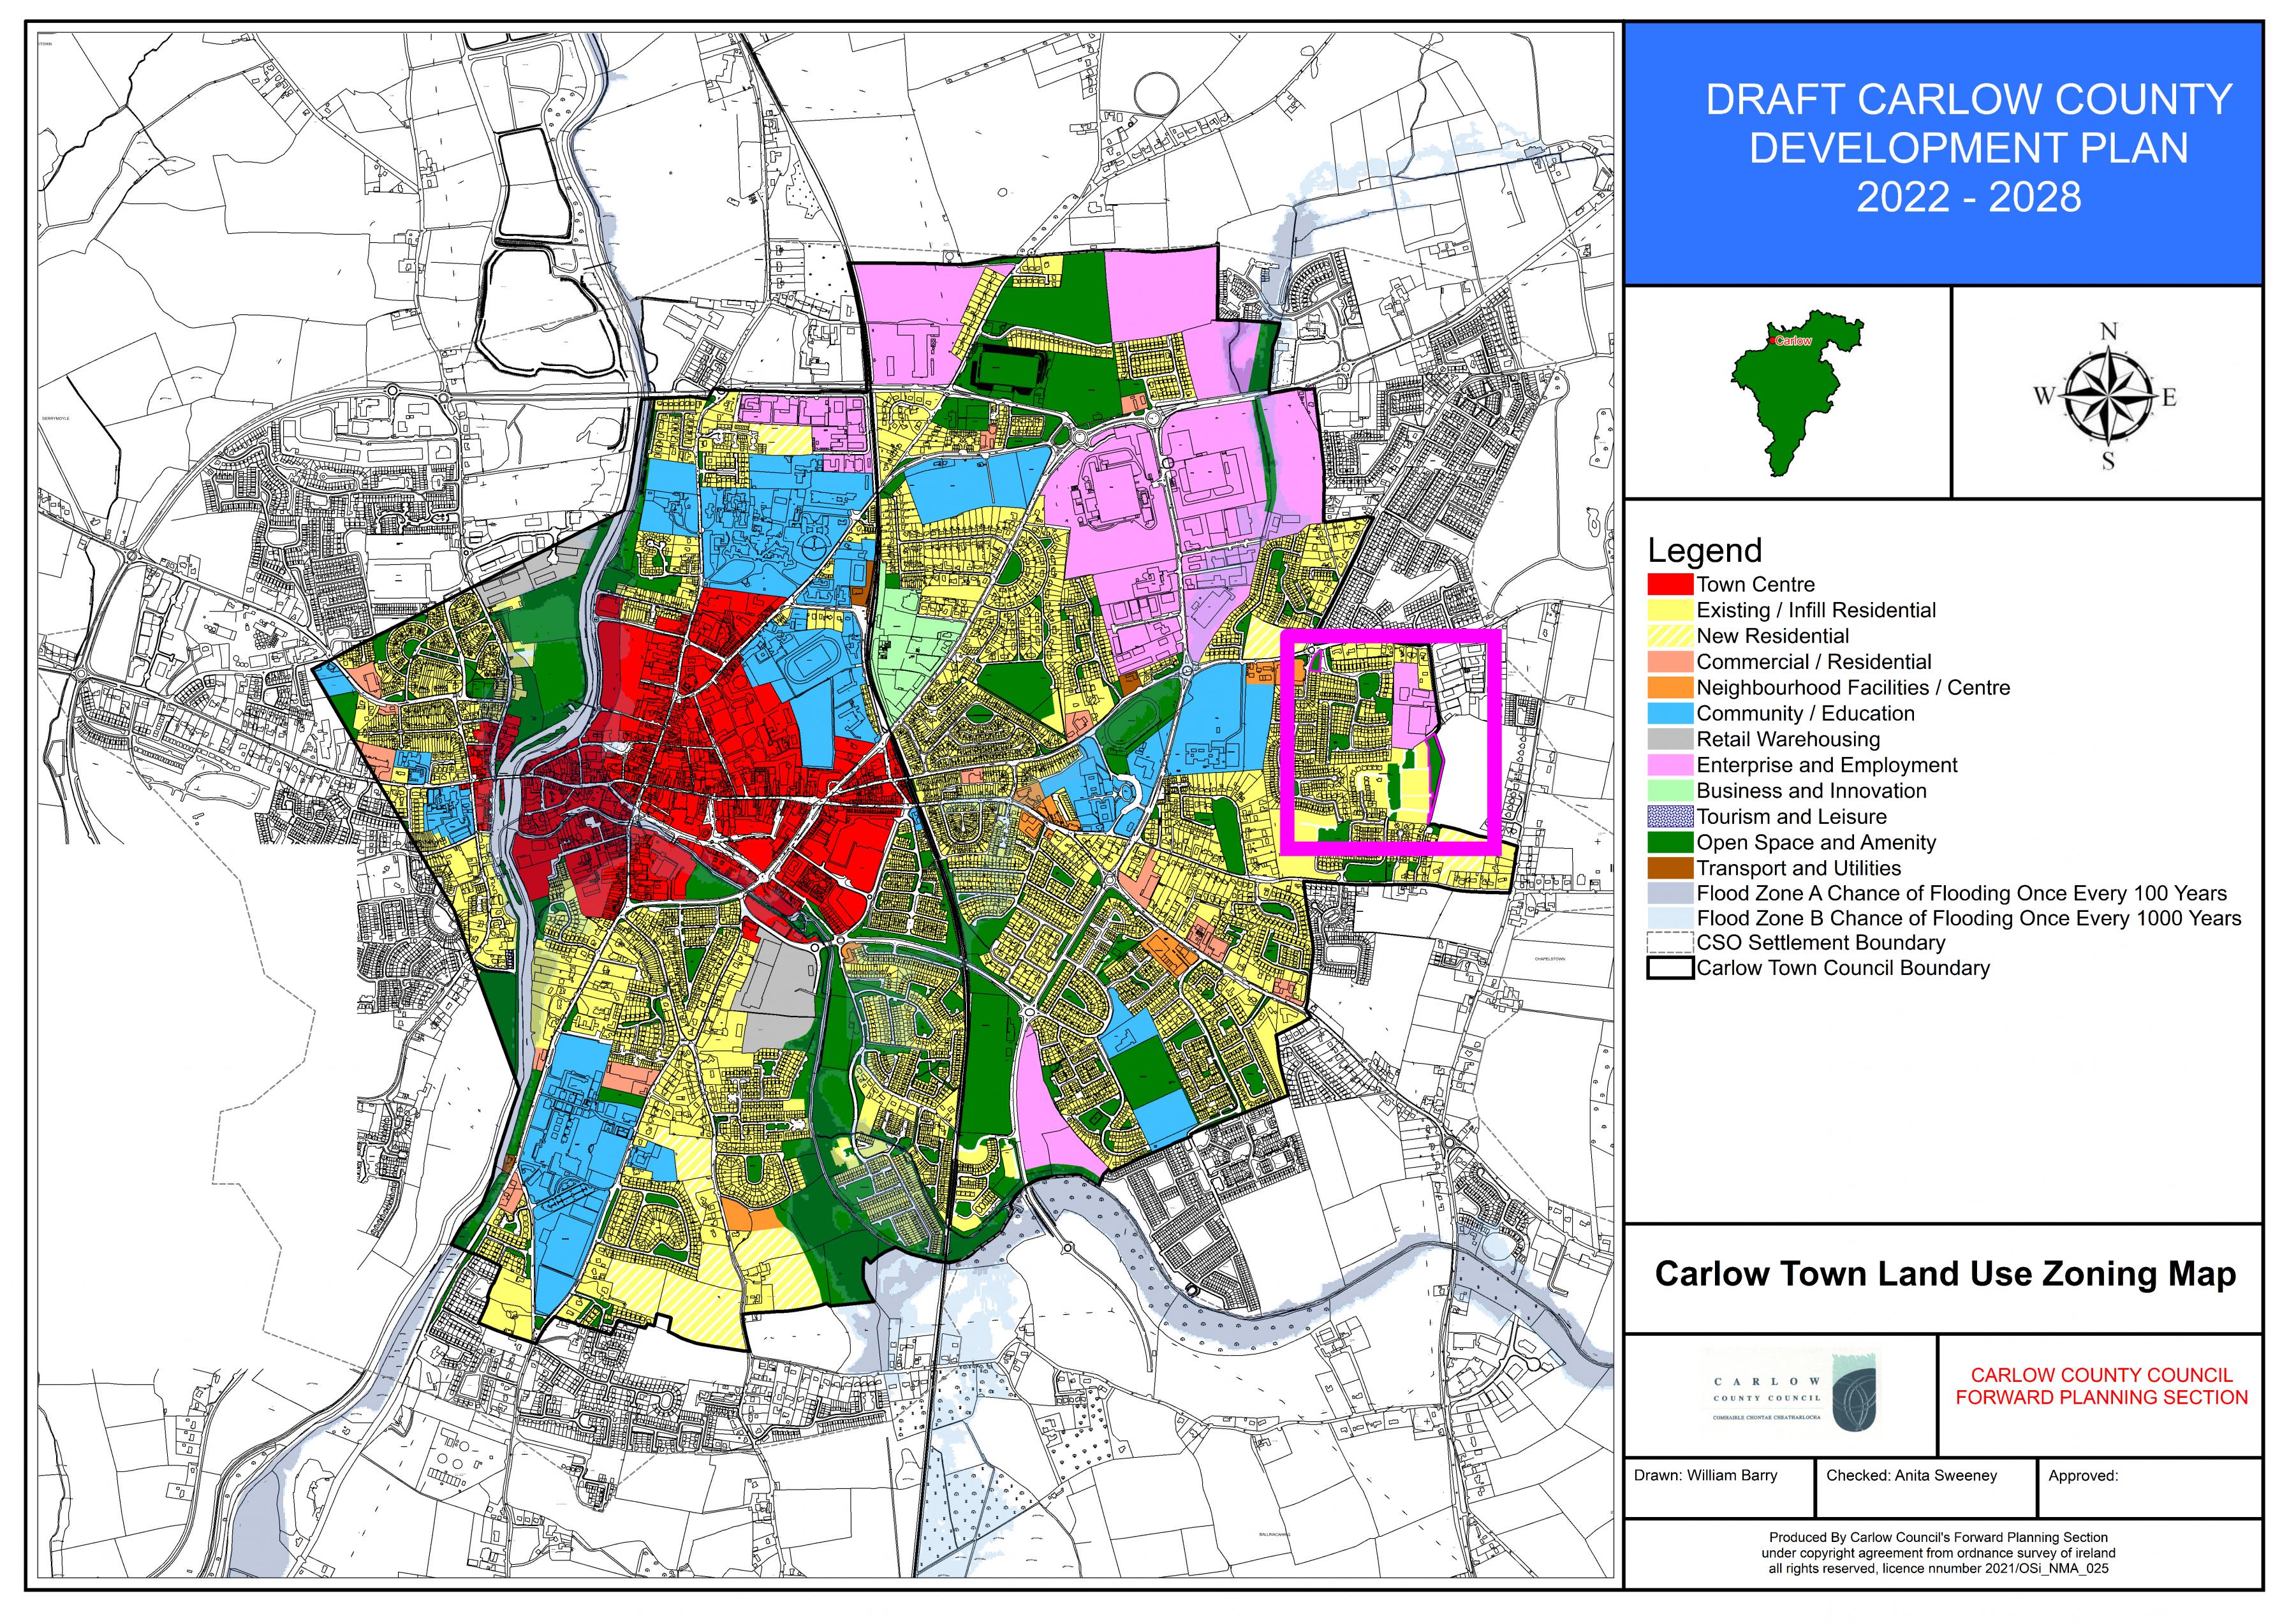 Carlow Town Land Use Zoning Map